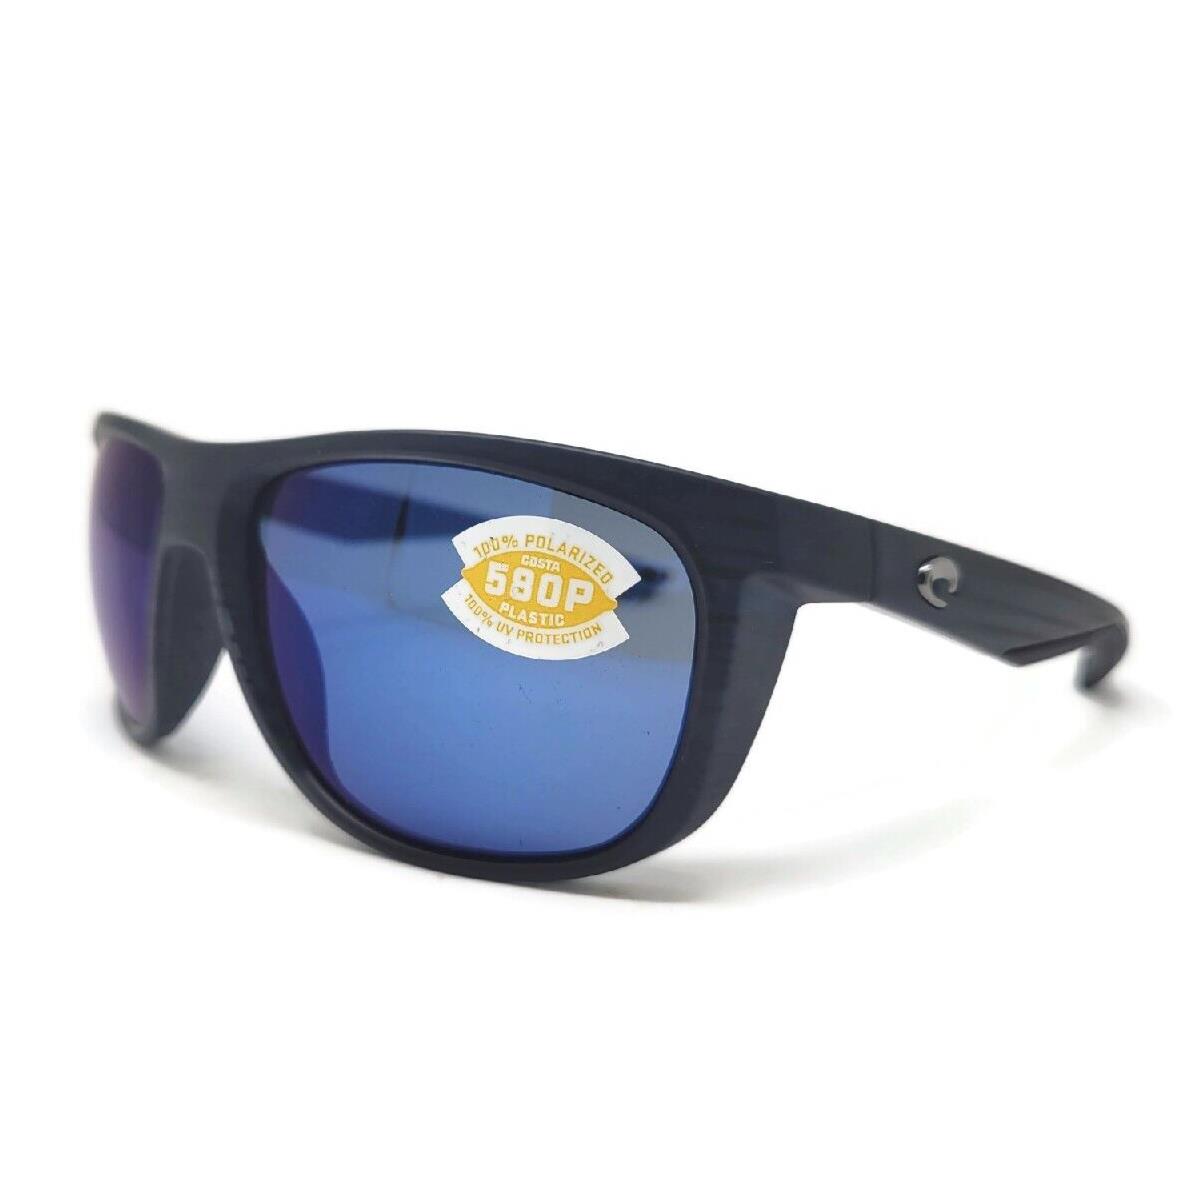 Costa Del Mar Kiwa Sunglasses Matte Black Teak - Blue Mirror 580P Kwa 111 Obmp - Frame: Matte Black Teak, Lens: Blue